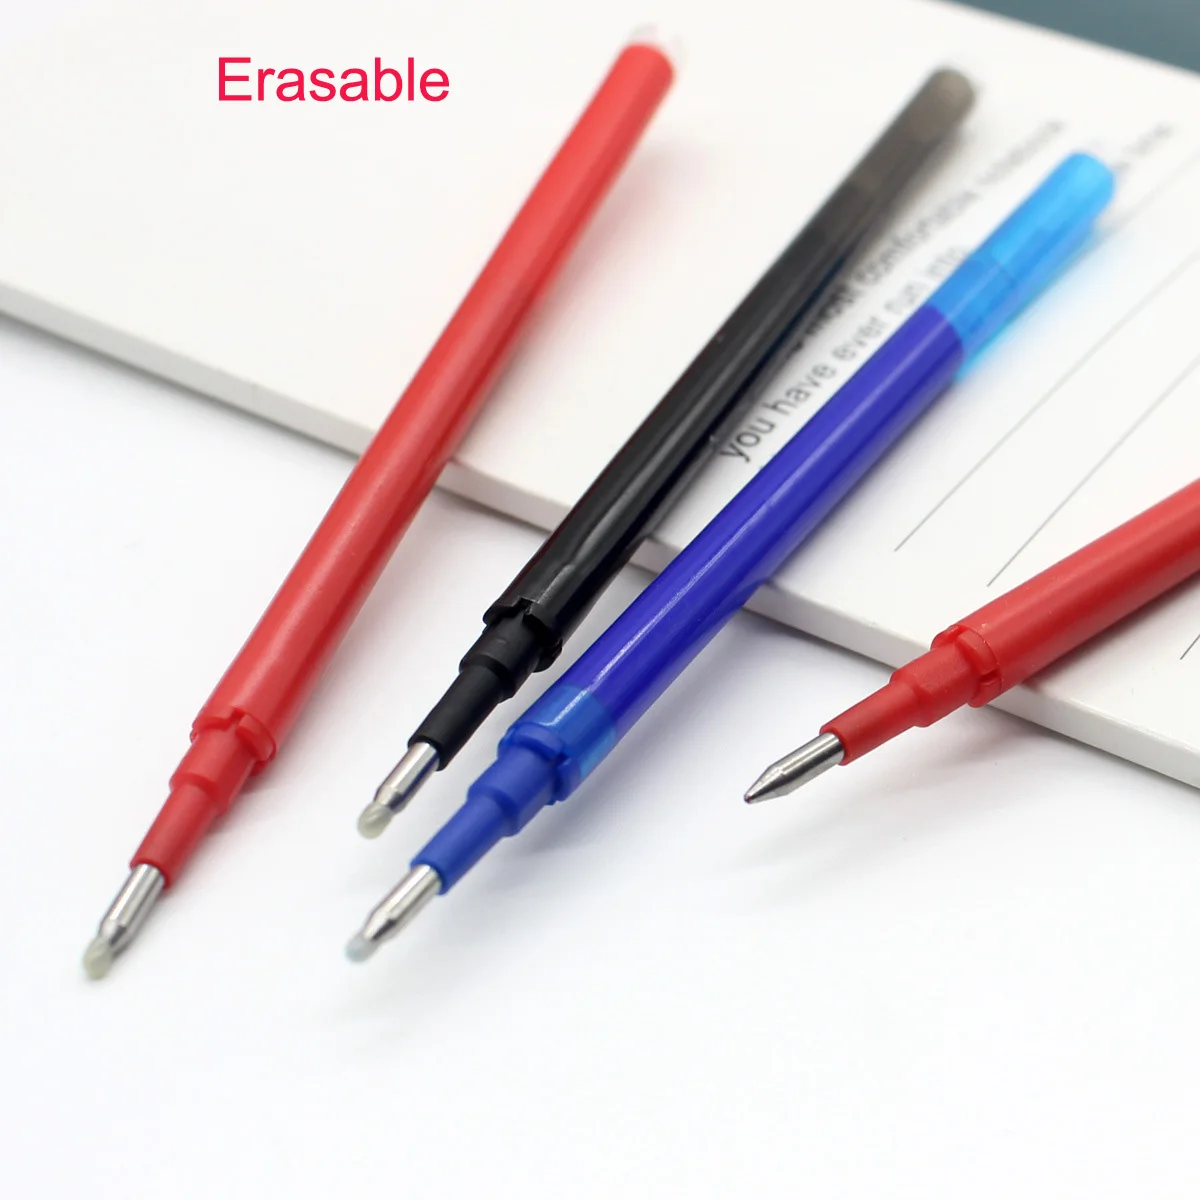 0.7mm /0.5mm Erasable Pen Refill Blue Black 8 Color Ink Office Accessories Stationery Erasable Pens Refill Rods Retractable